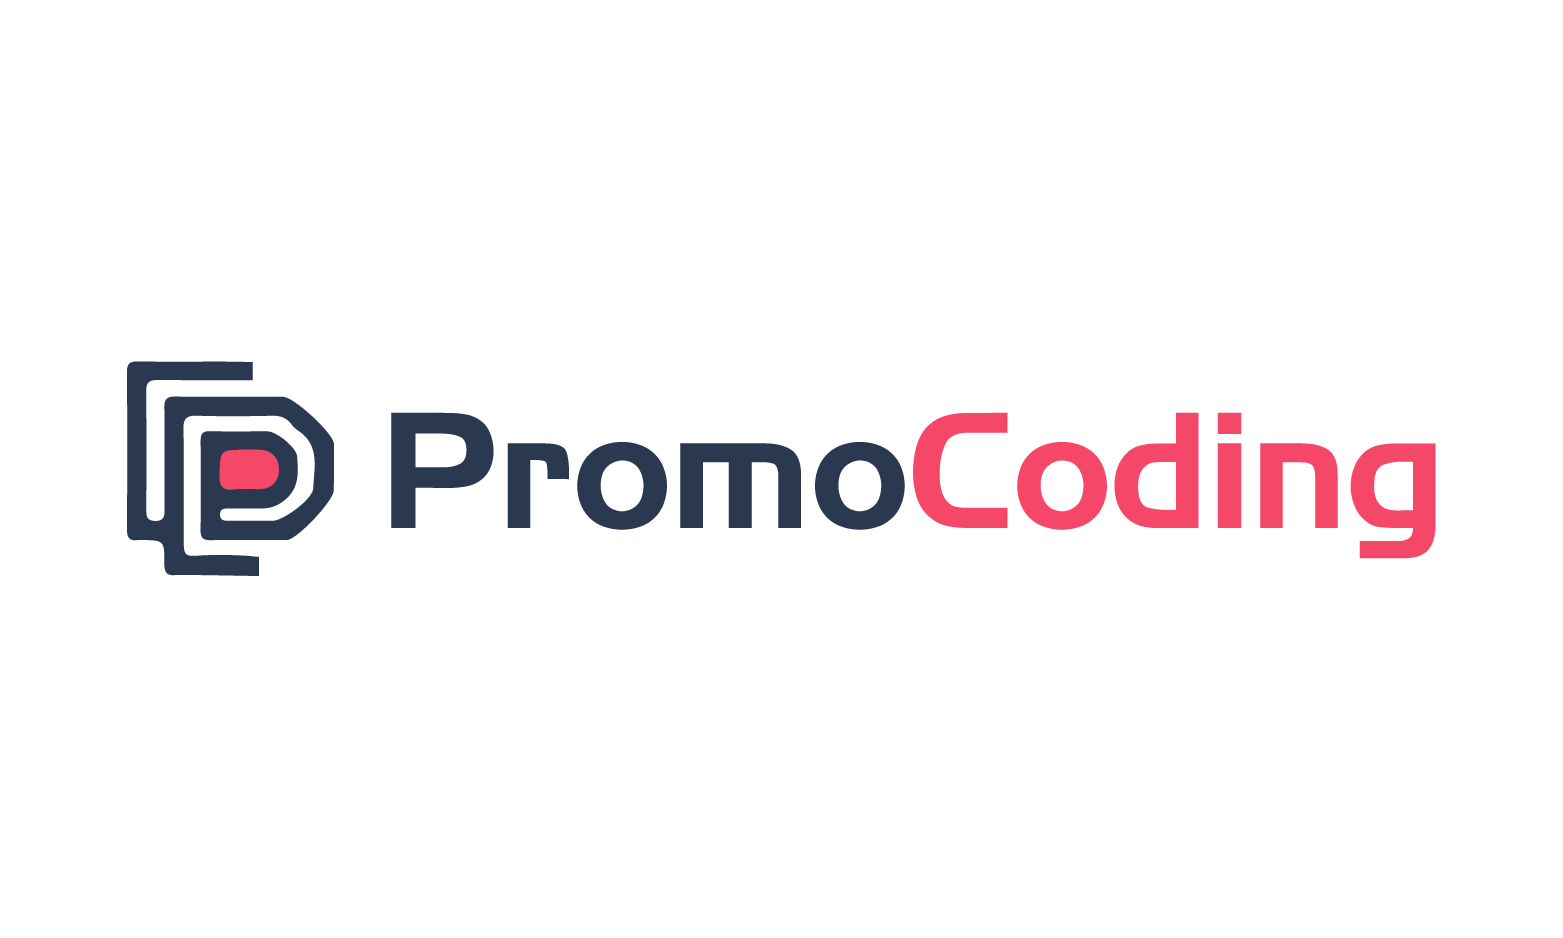 PromoCoding.com - Creative brandable domain for sale